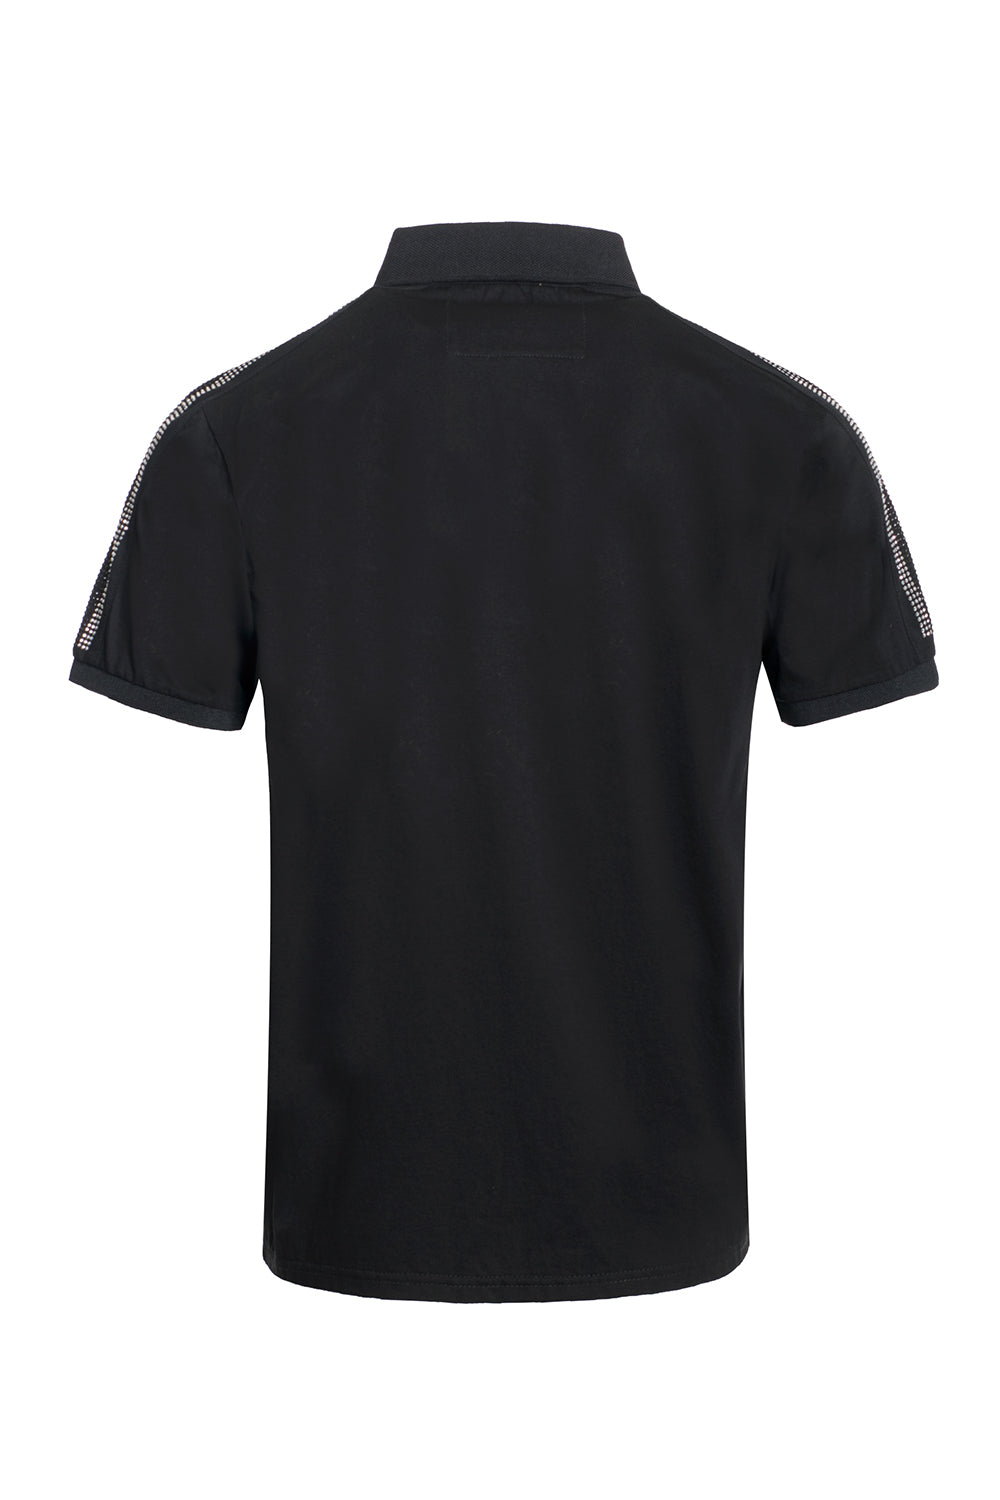 BARABAS men's black rhinestone Silver short sleeve polo shirts PS105